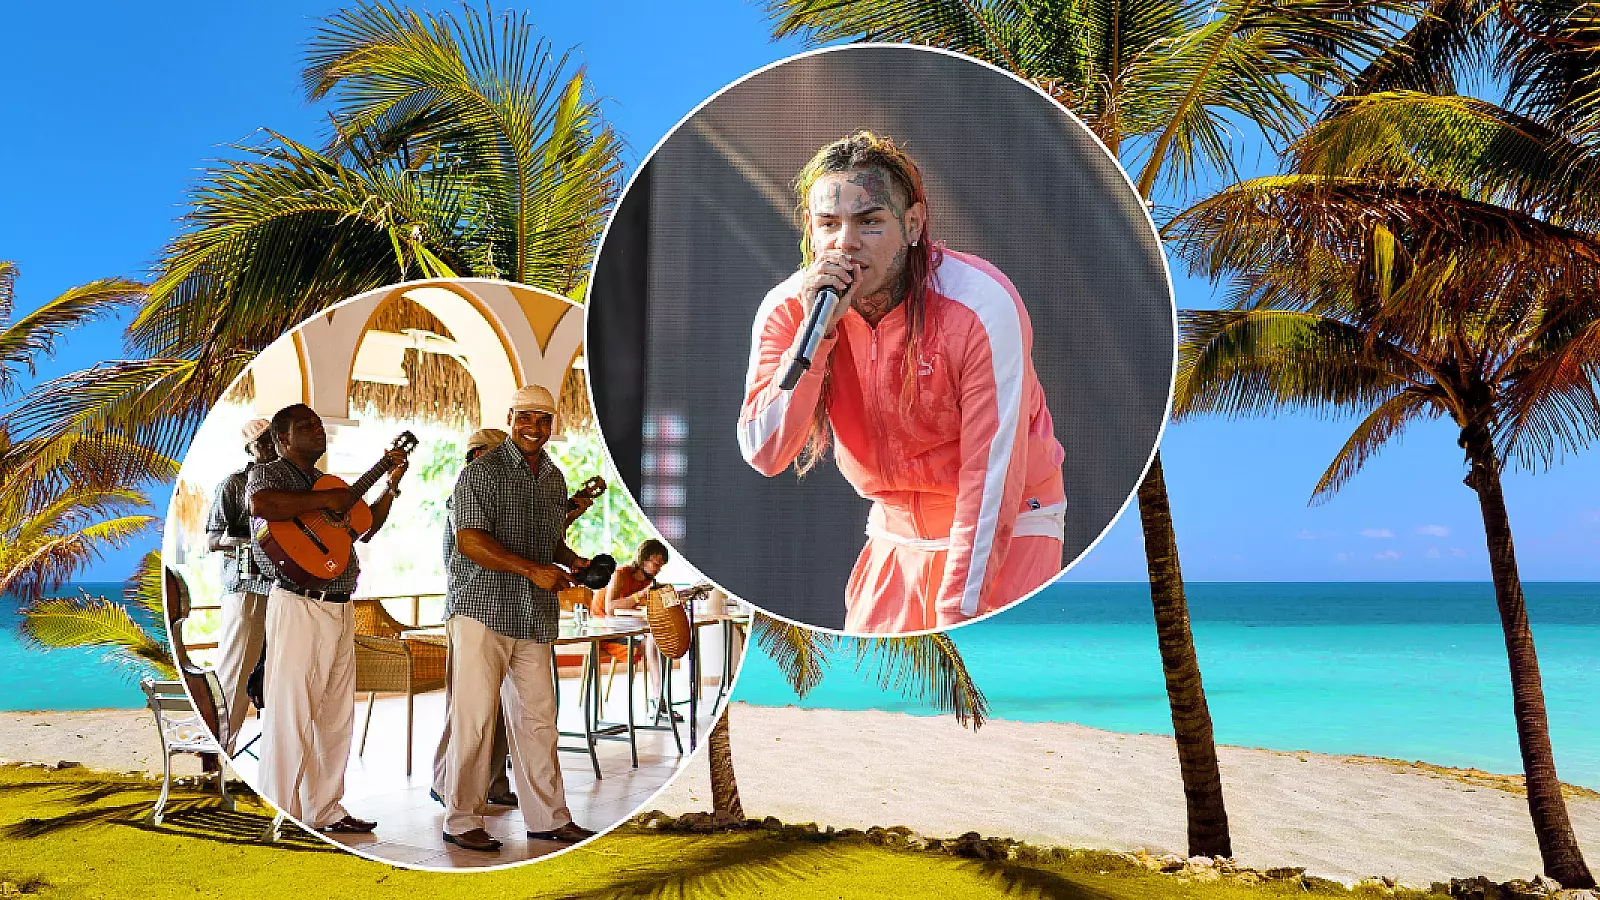 Tekashi 6ix9ine arrasa cantando Celia Cruz en Varadero: “Me encanta Cuba”